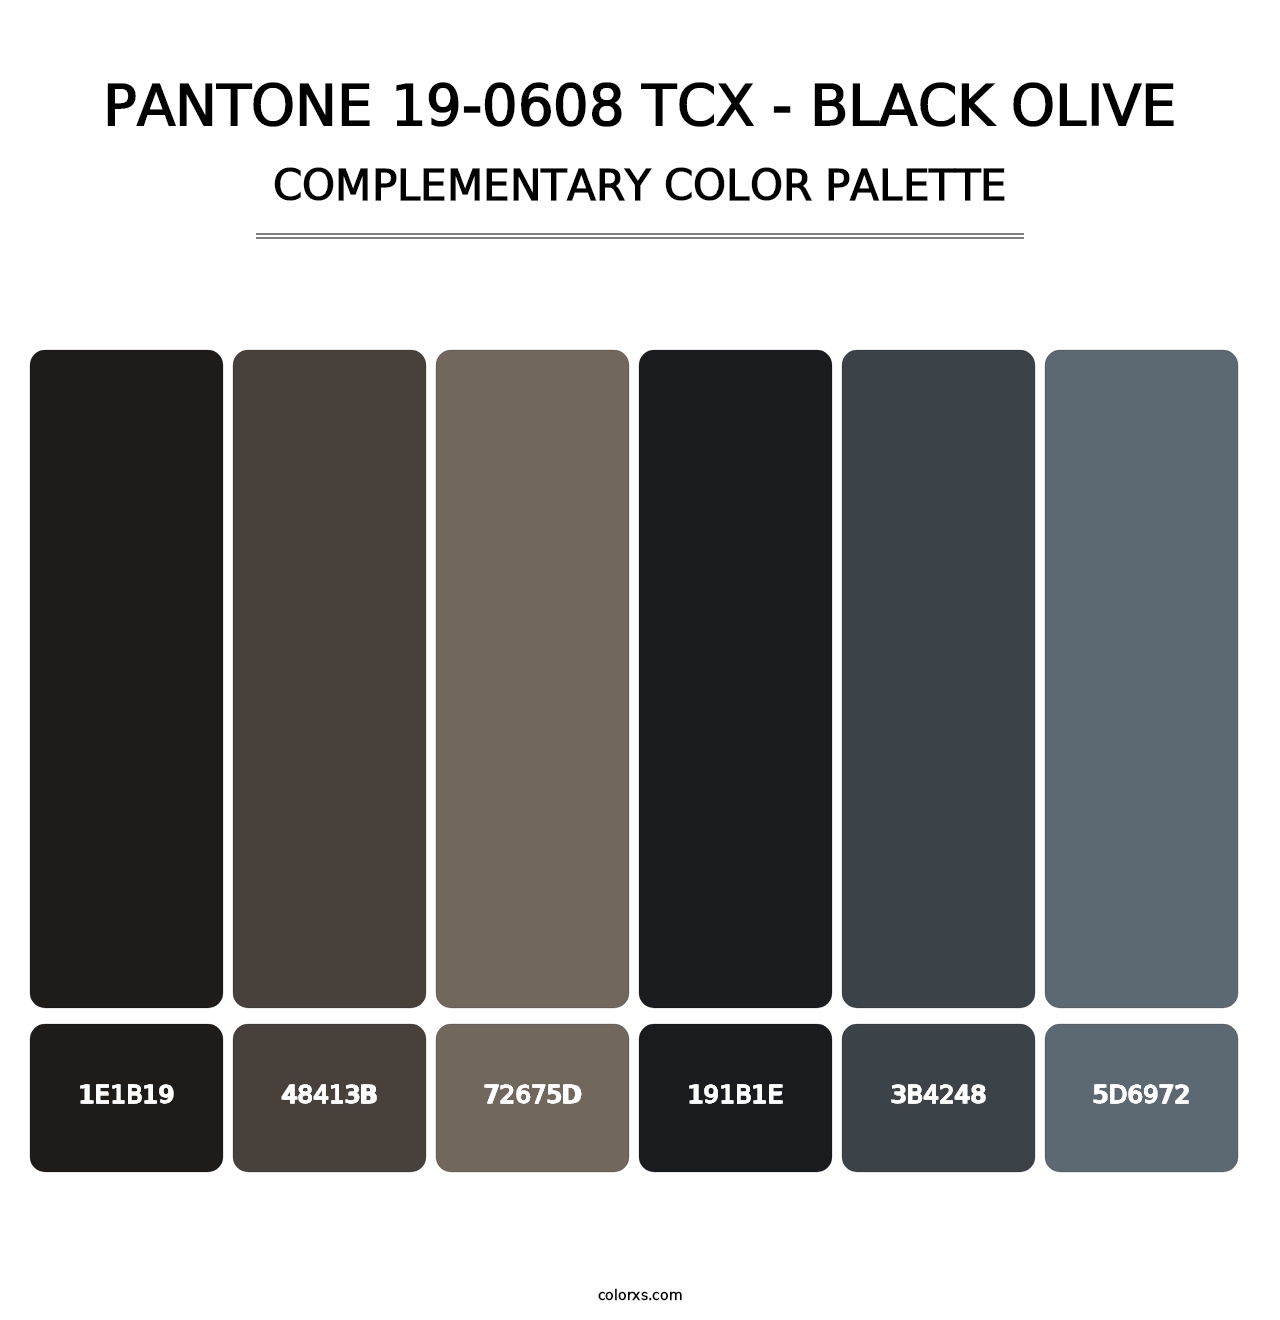 PANTONE 19-0608 TCX - Black Olive - Complementary Color Palette